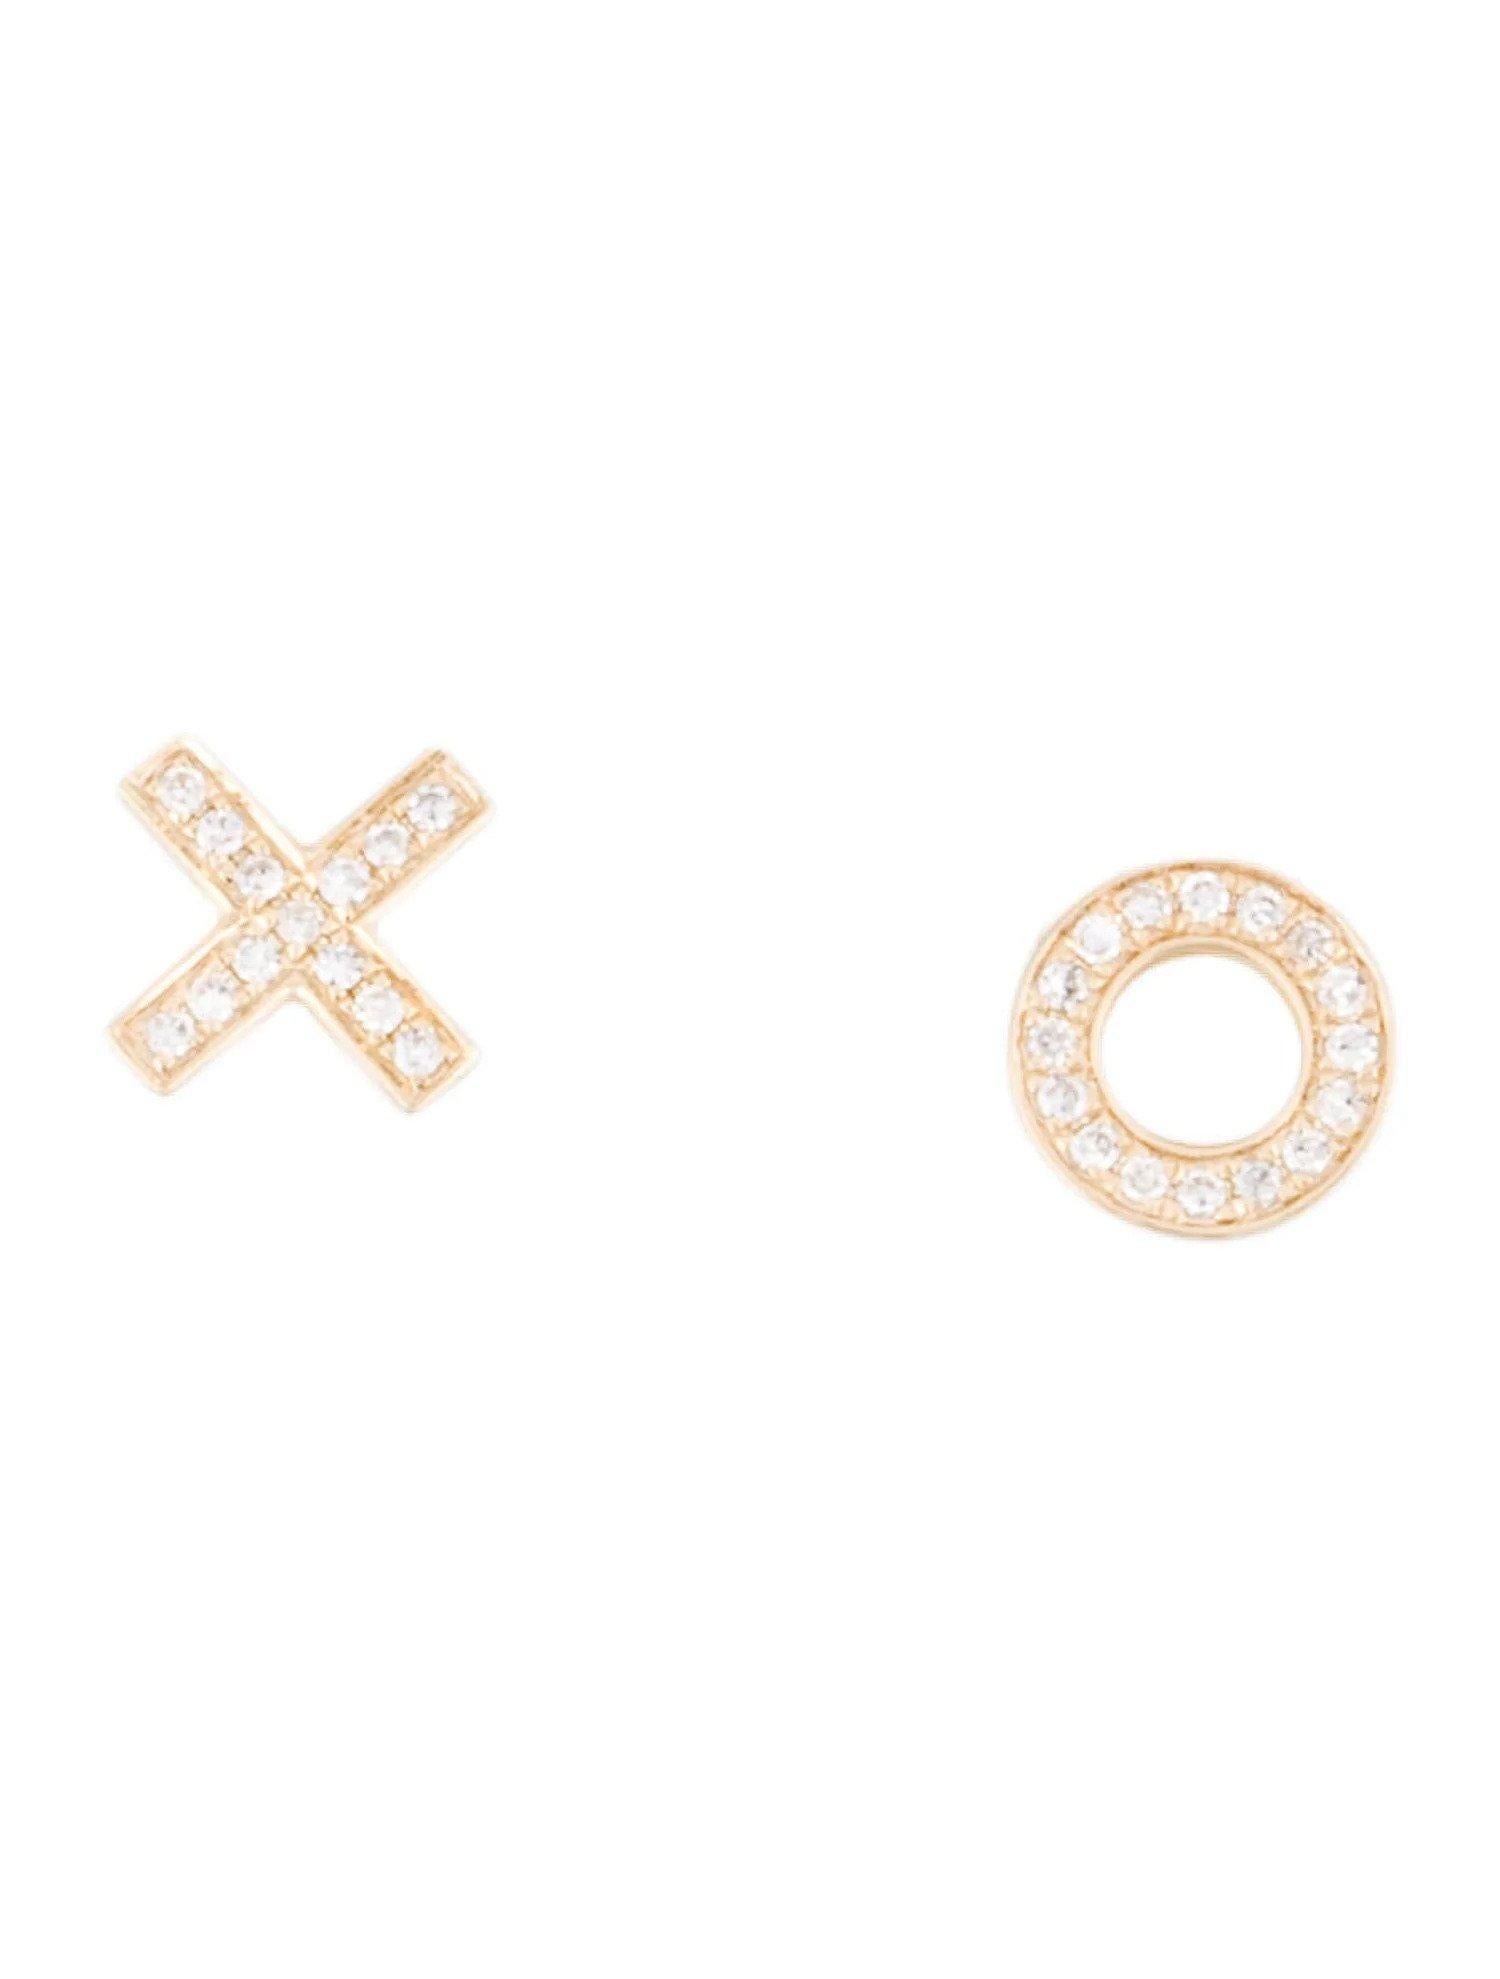 Contemporary 14K White Gold XO Diamond Stud Earrings for Her For Sale